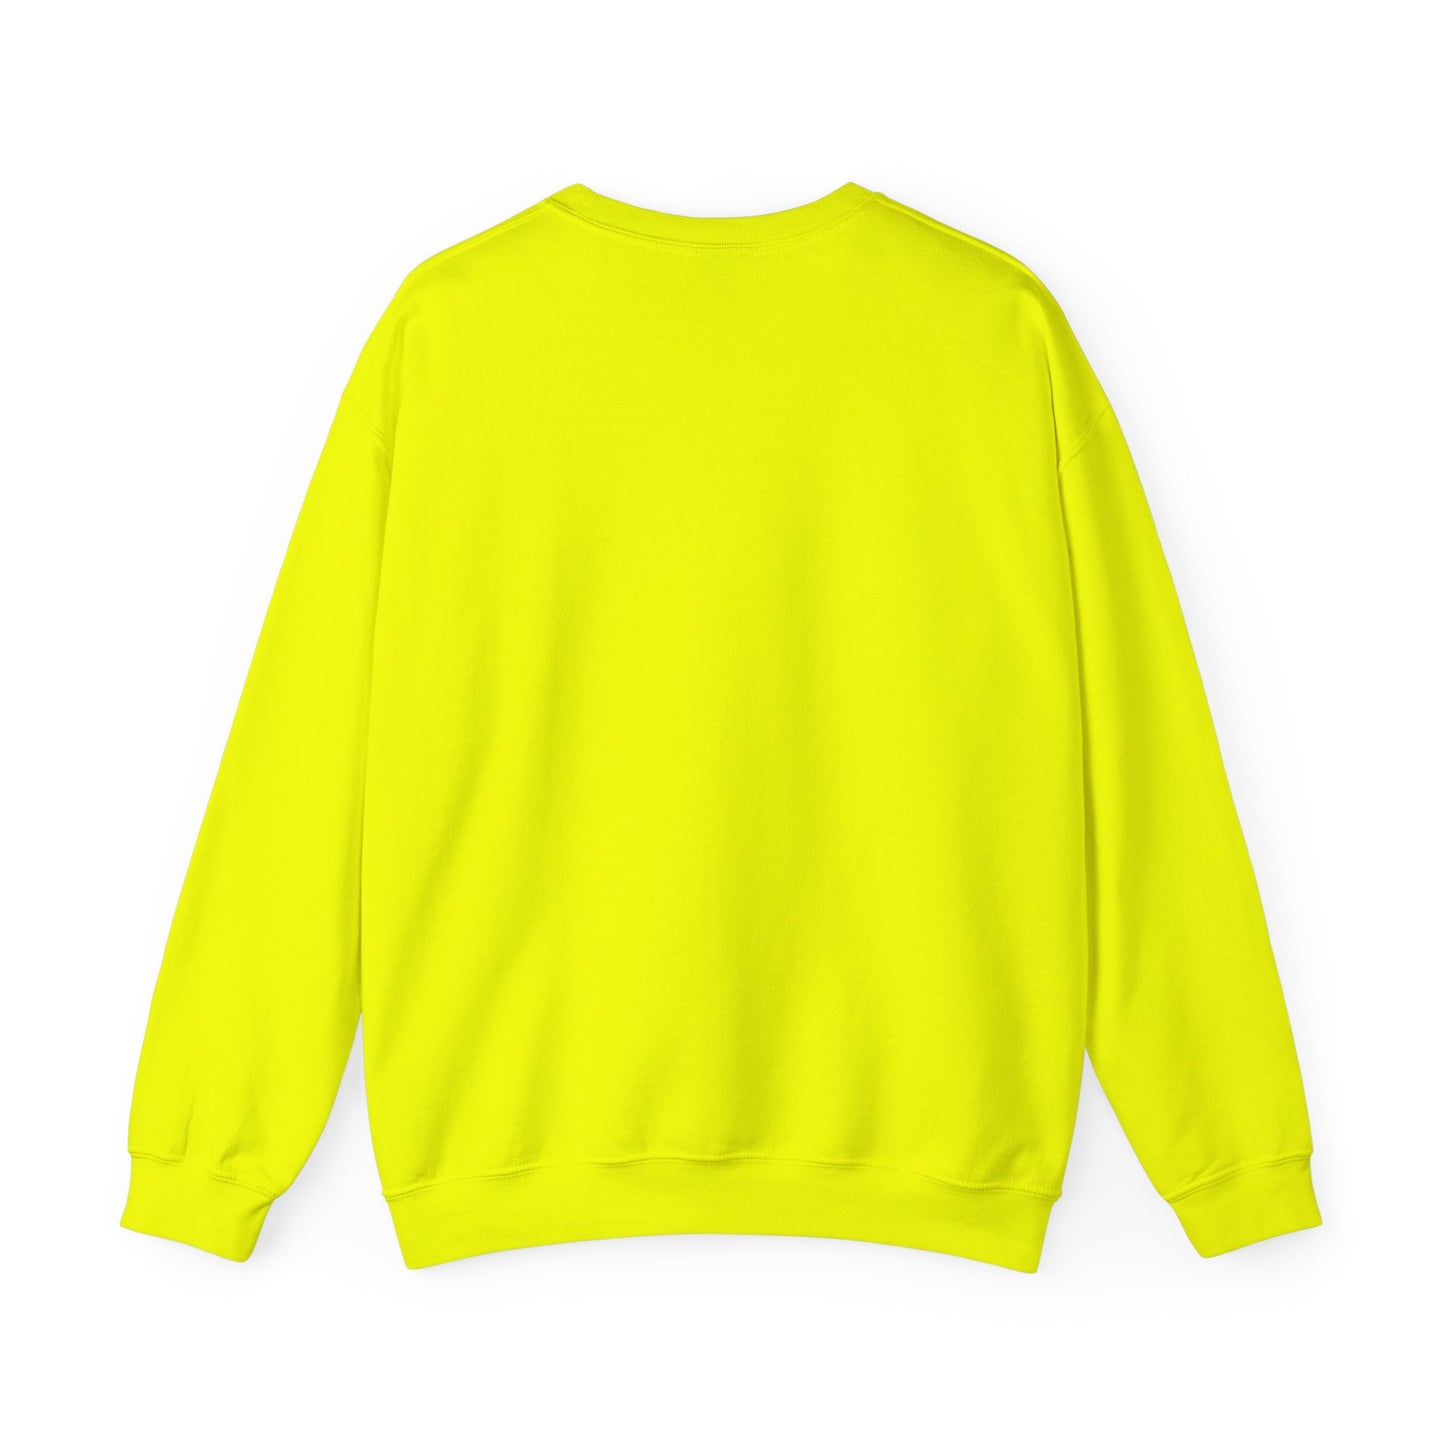 Neon WTF Sweatshirt